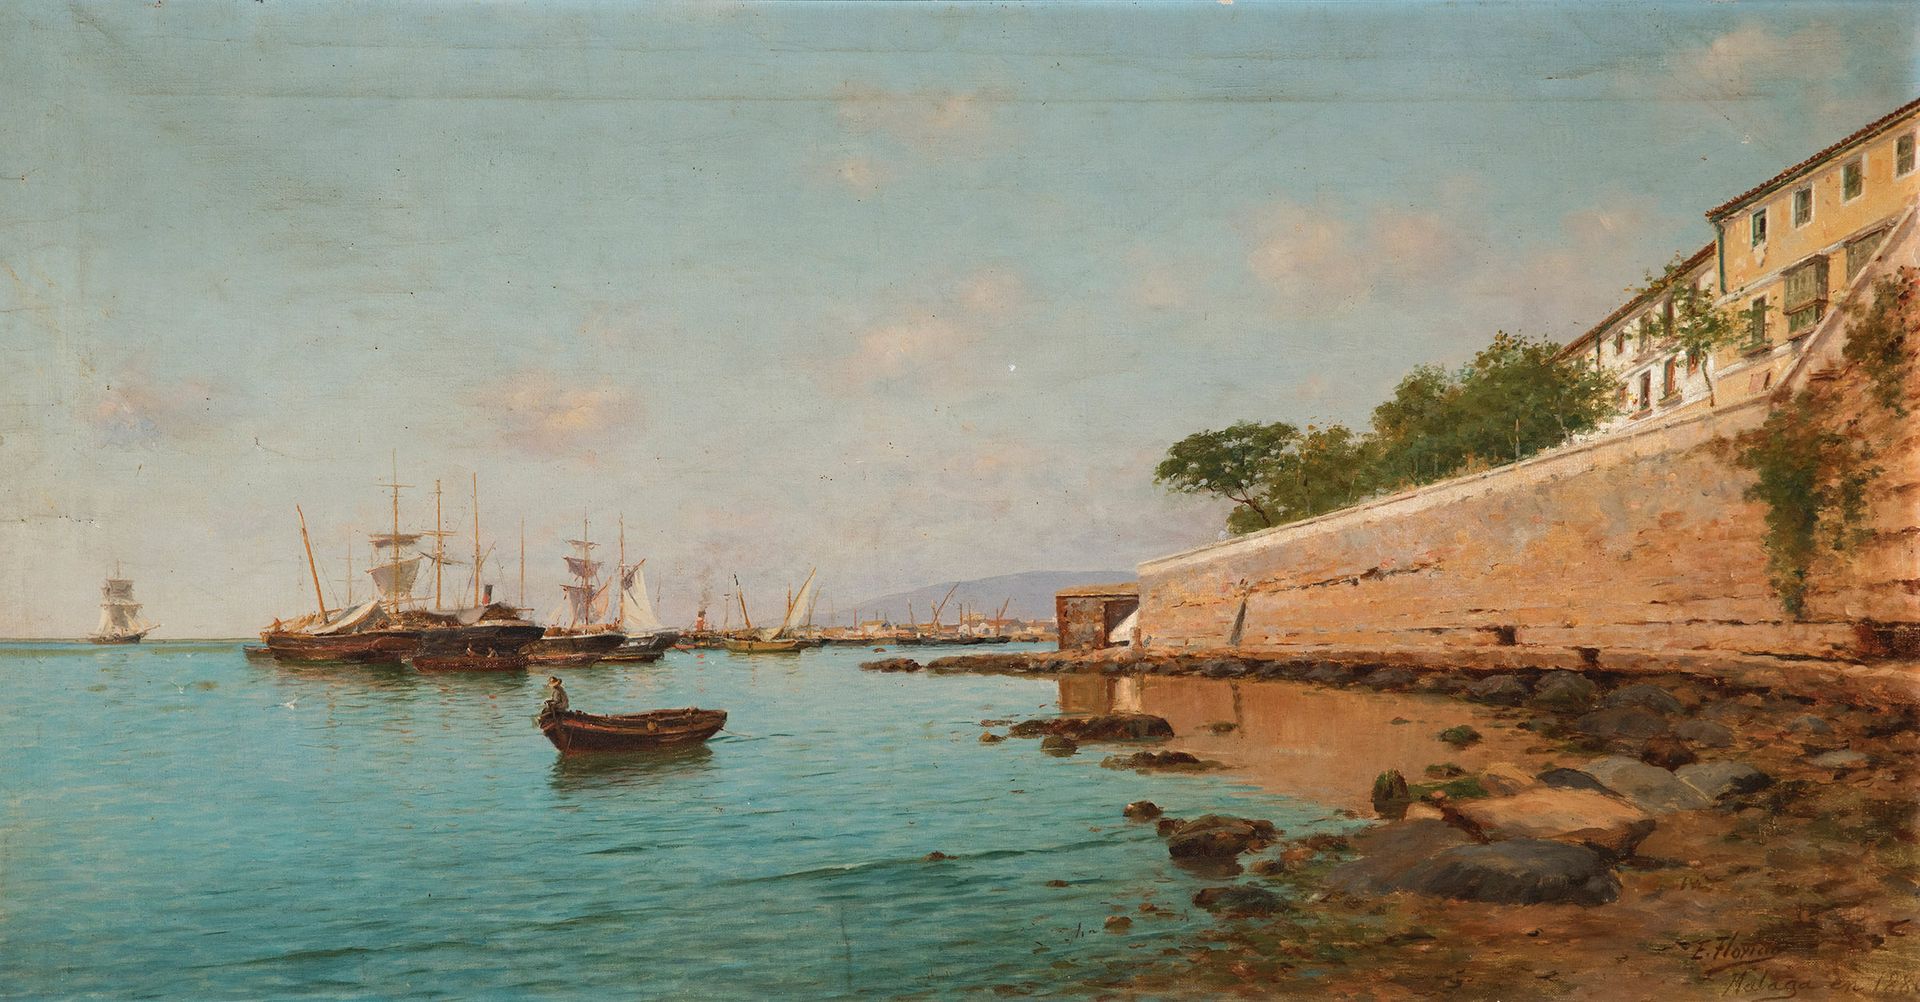 Null ENRIQUE FLORIDO BERNILS (Malaga, 1873 - 1929).
"Port de Malaga", 1880.
Huil&hellip;